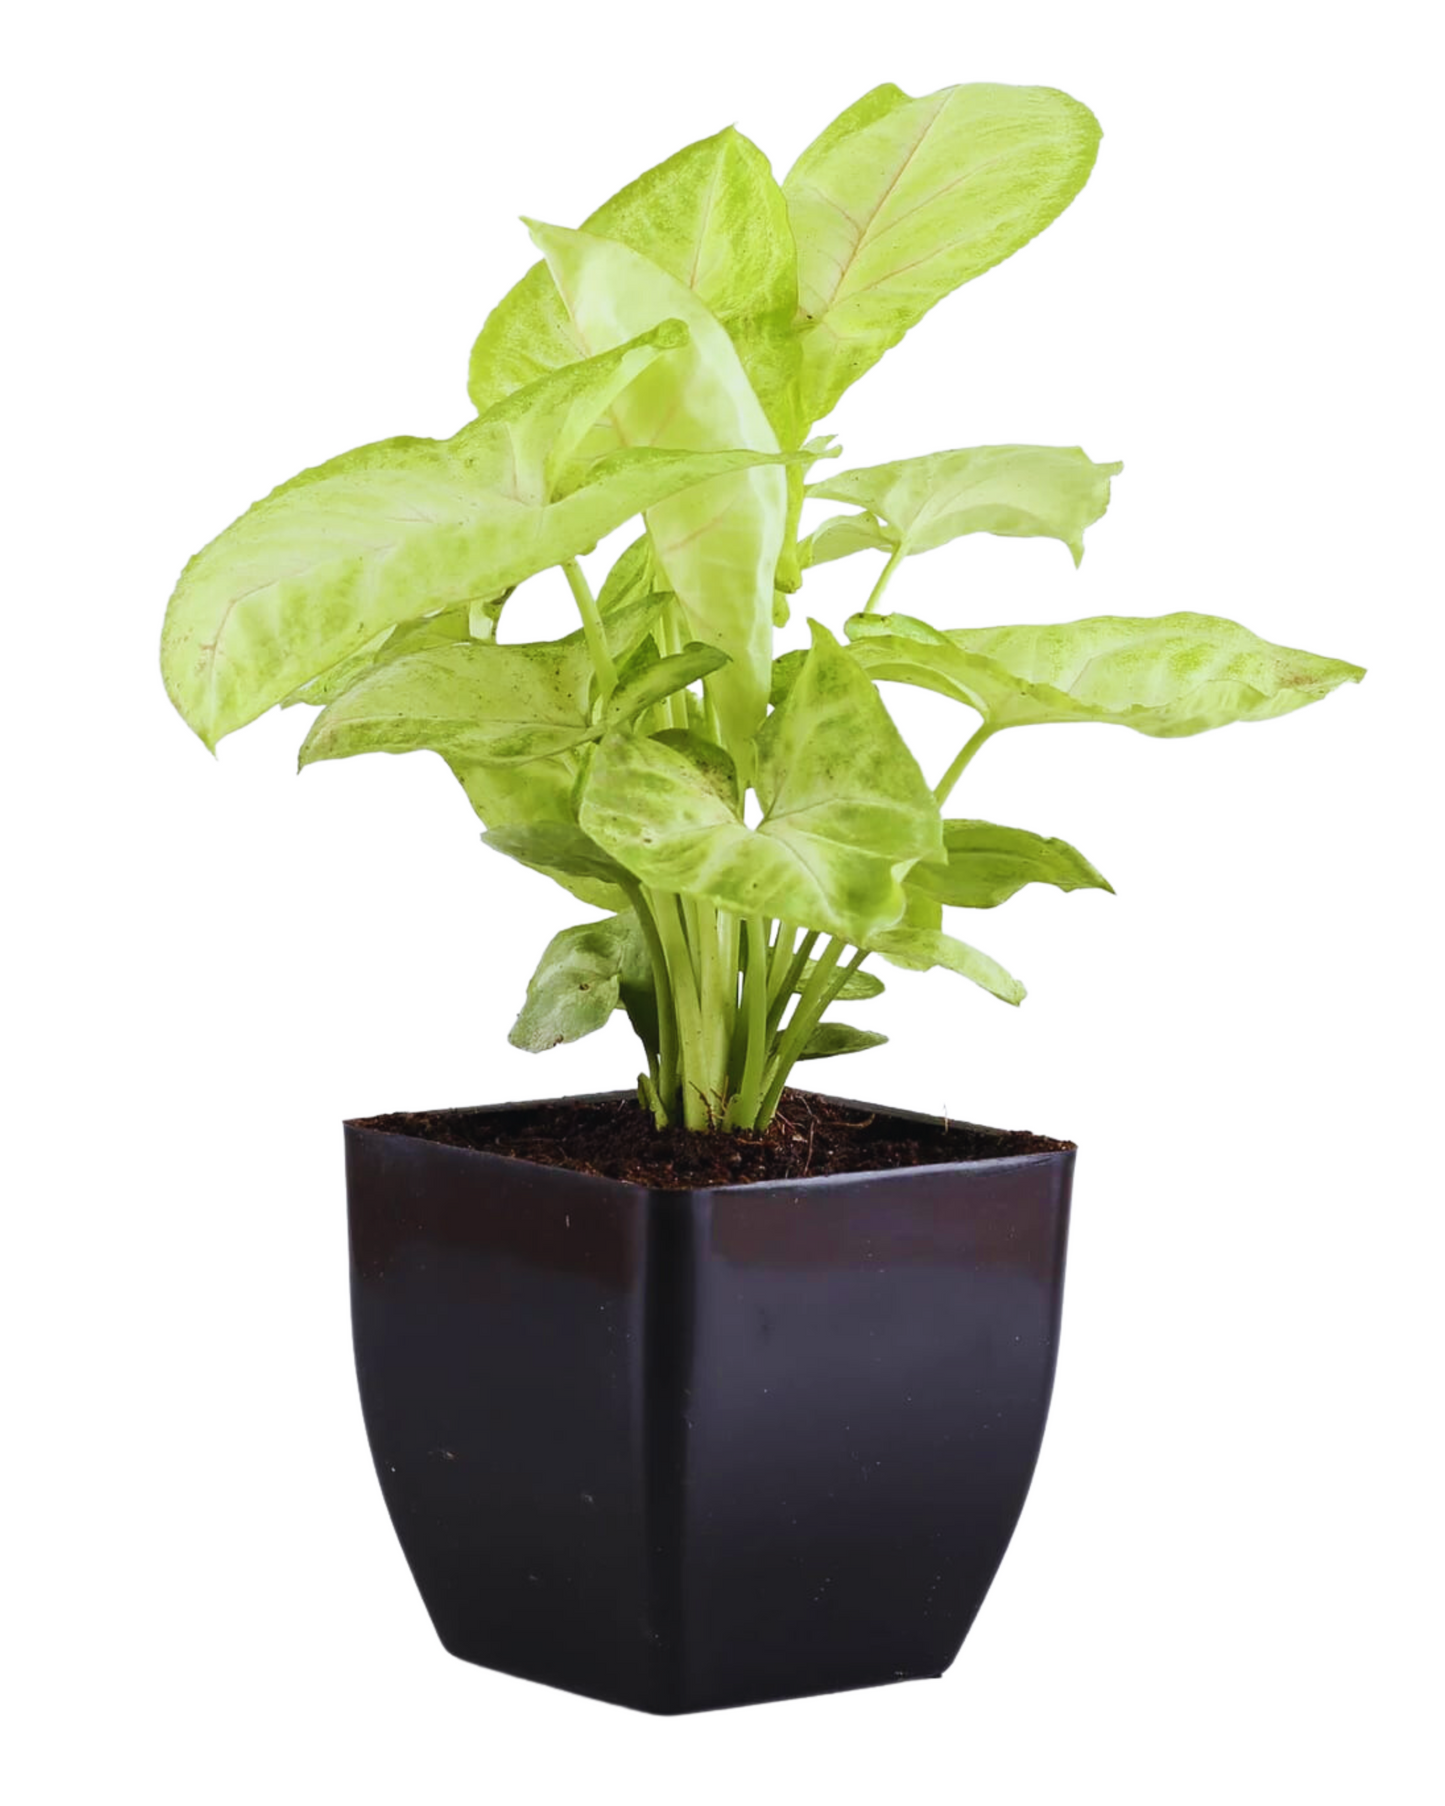 Combo set of 3 -Household Plant (Syngonium Plant & Jade Plant)